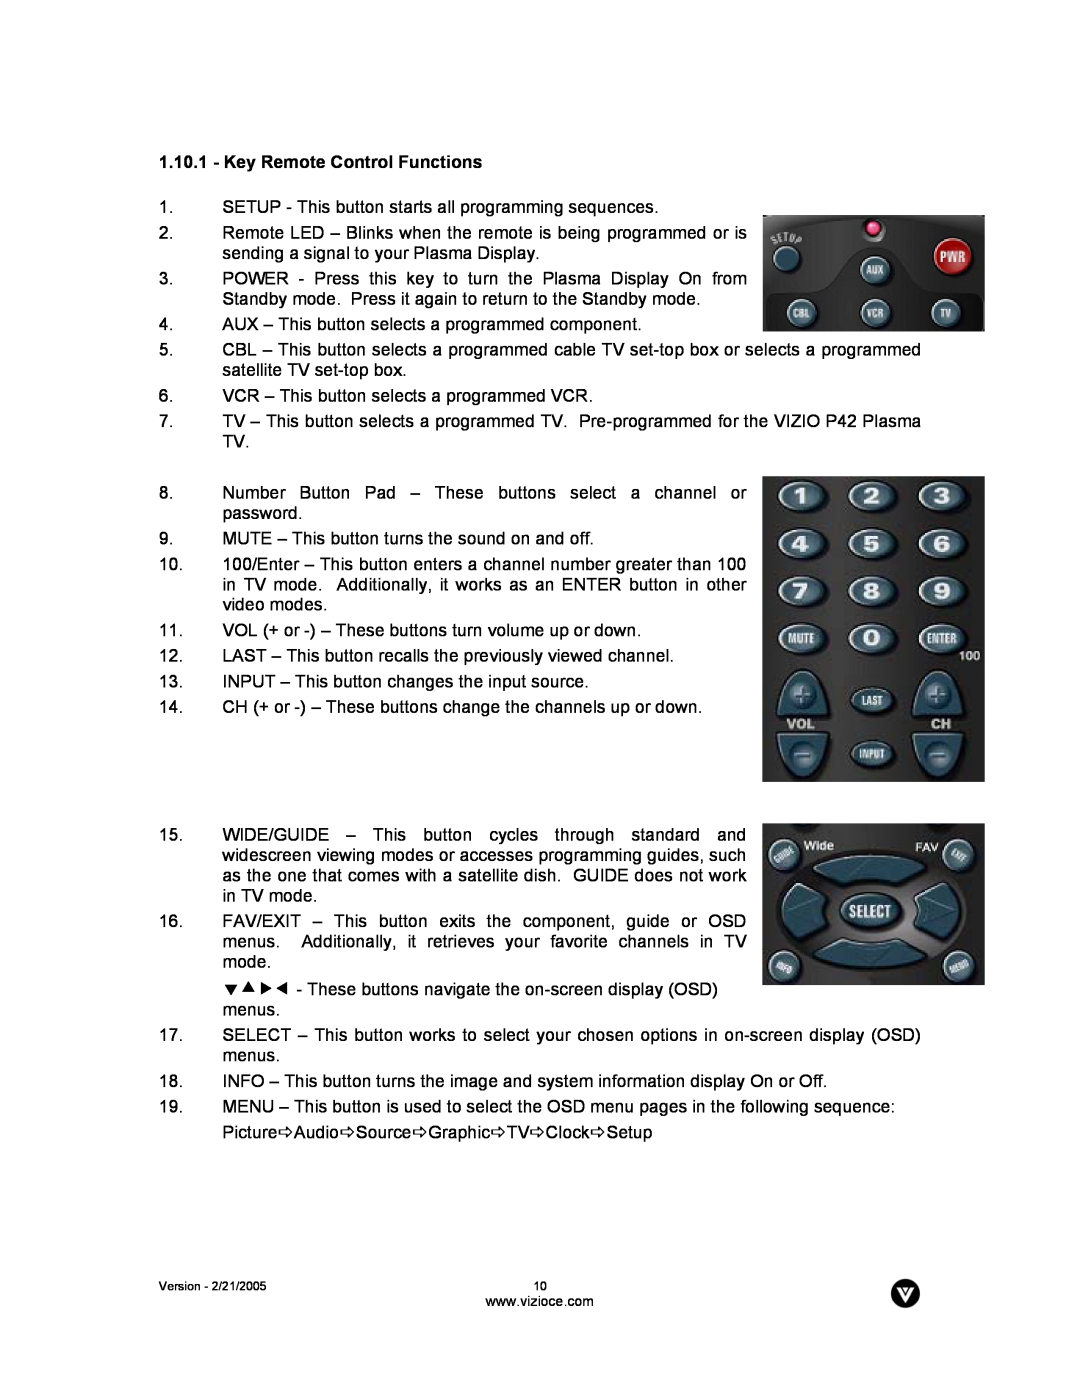 Vizio P42 manual Key Remote Control Functions 